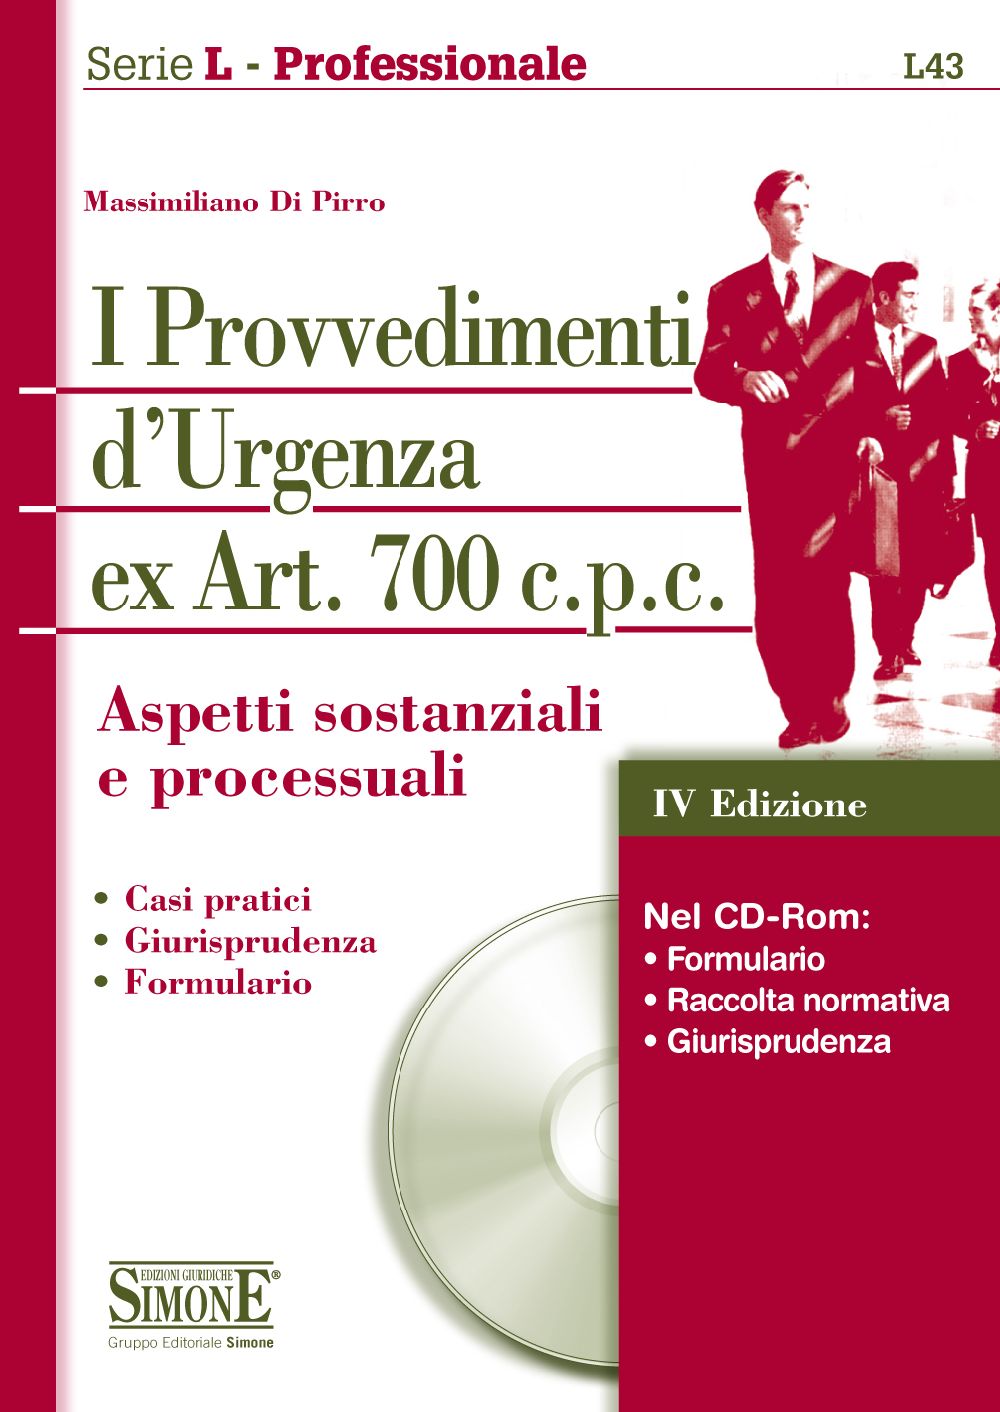 I Provvedimenti d'Urgenza ex Art. 700 c.p.c. - L43